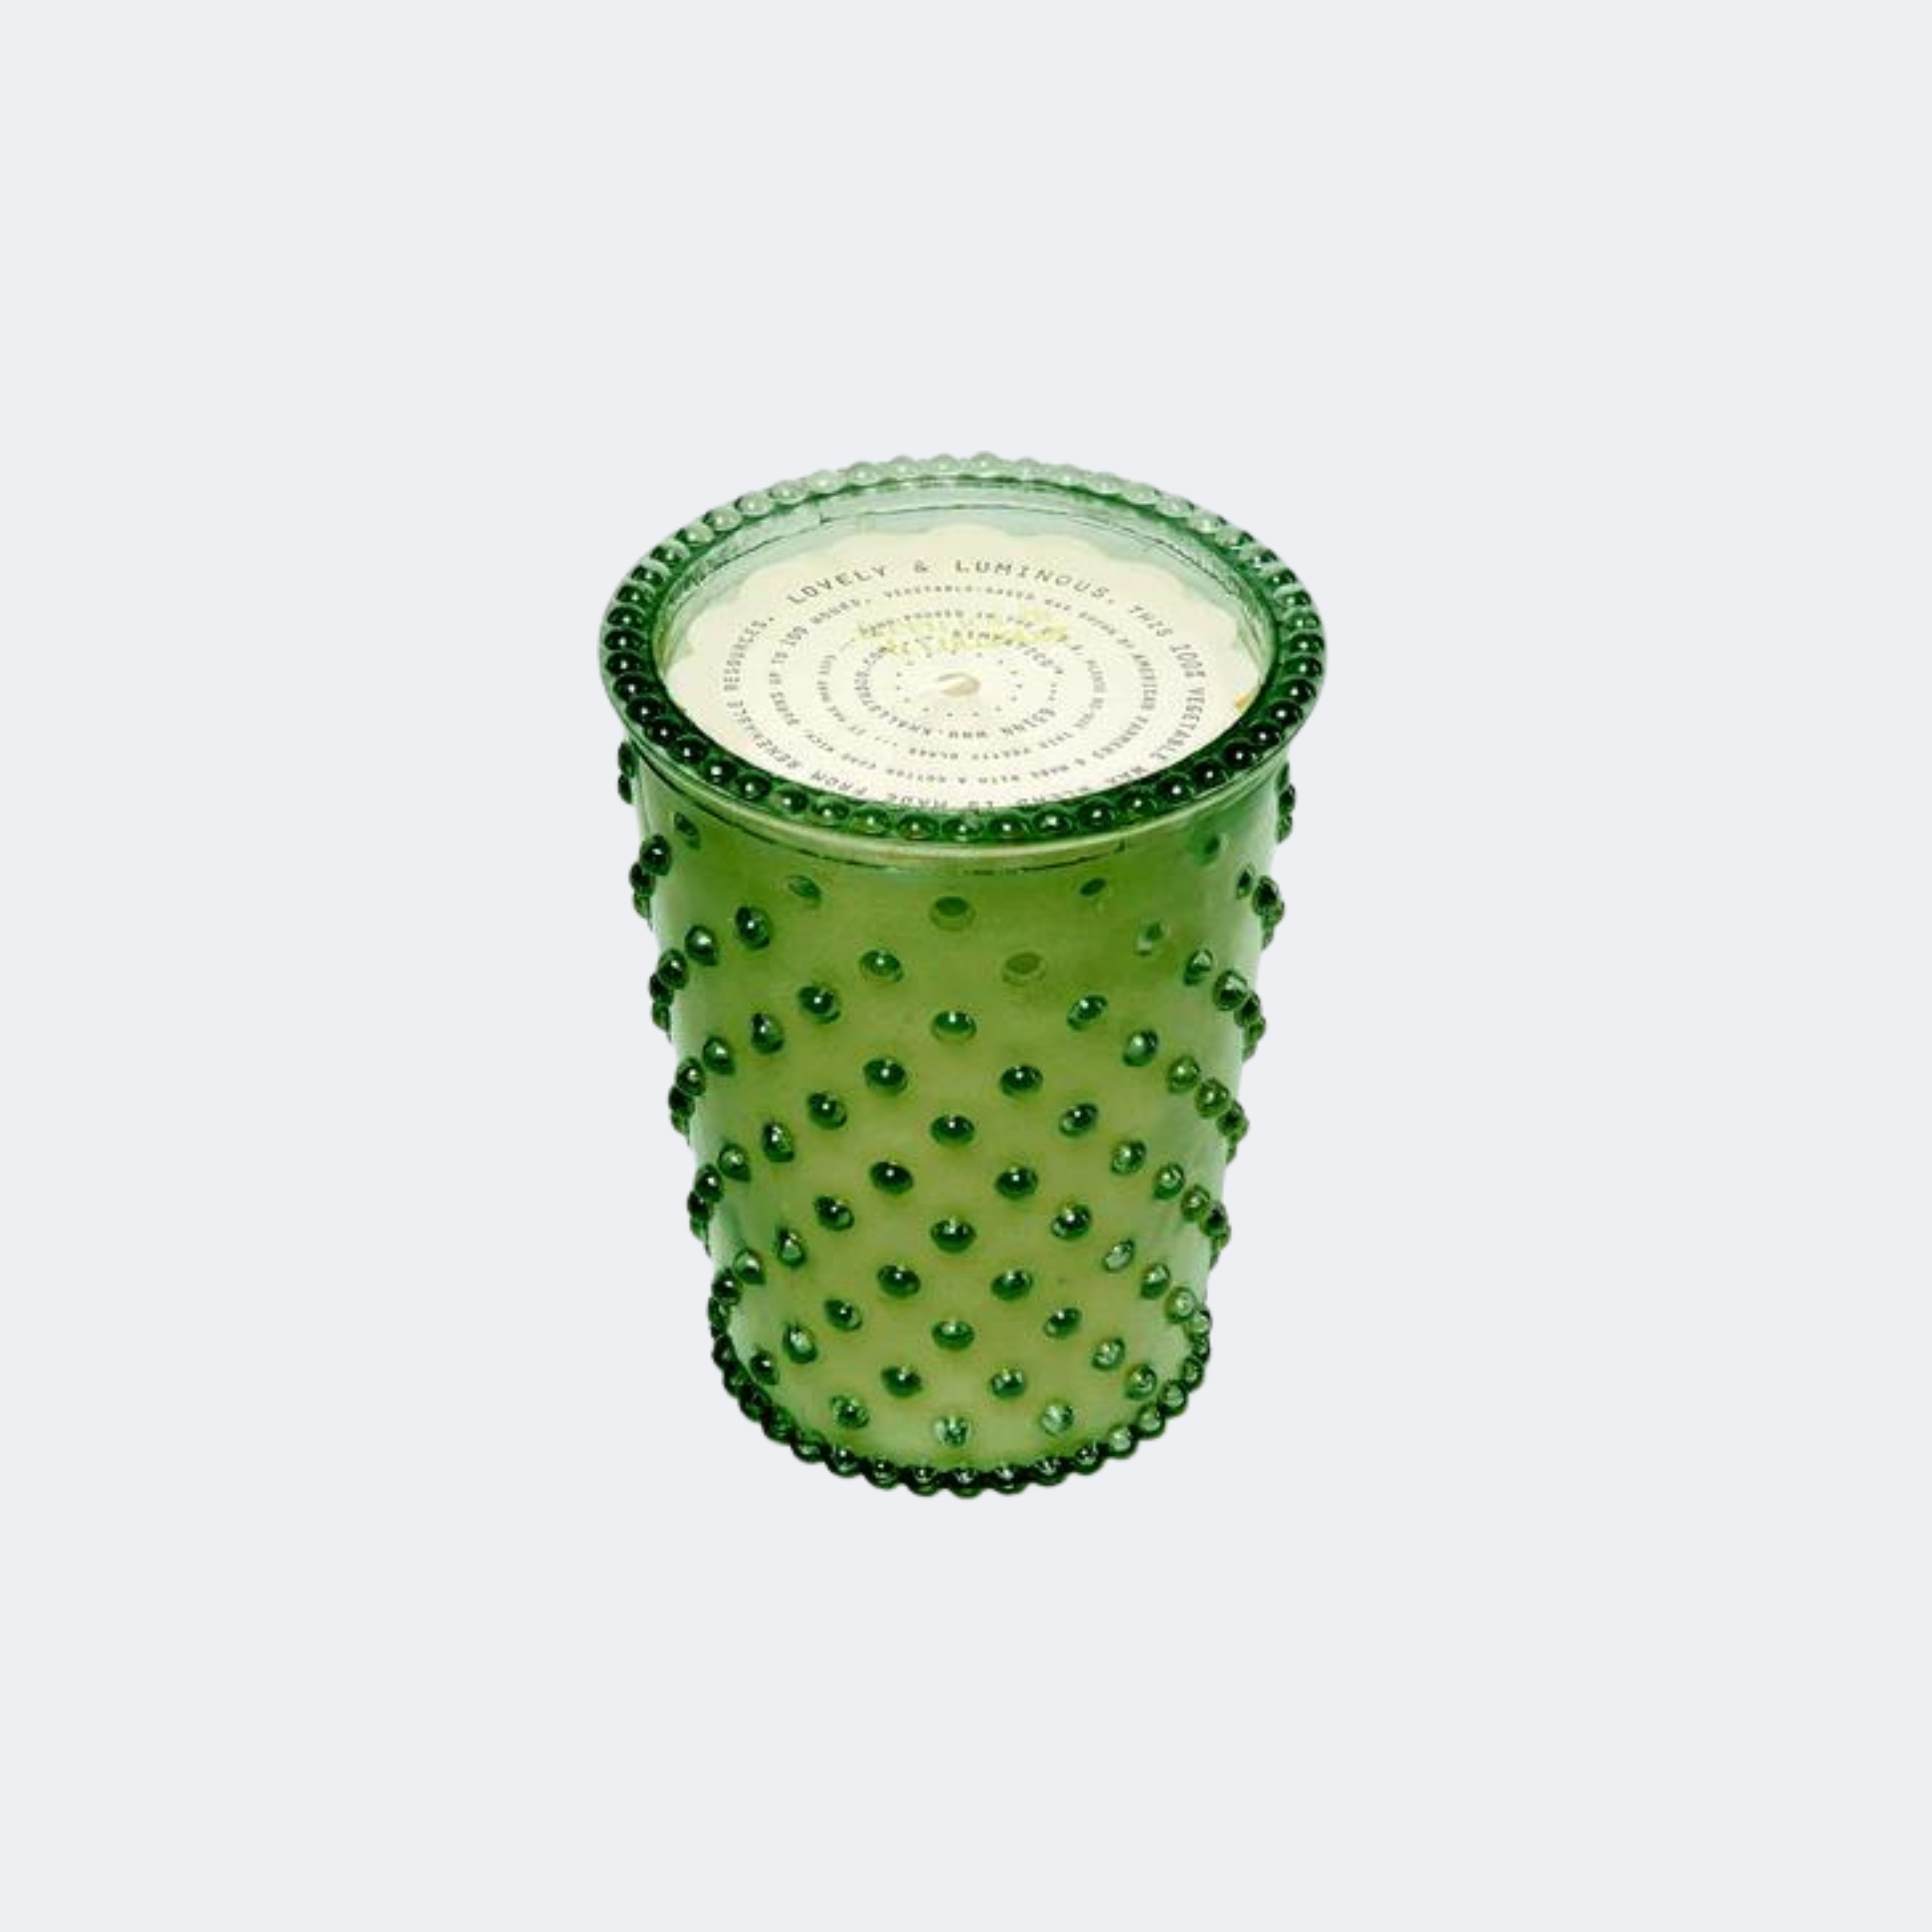 Simpatico Green Tea & Cucumber Hobnail Candle